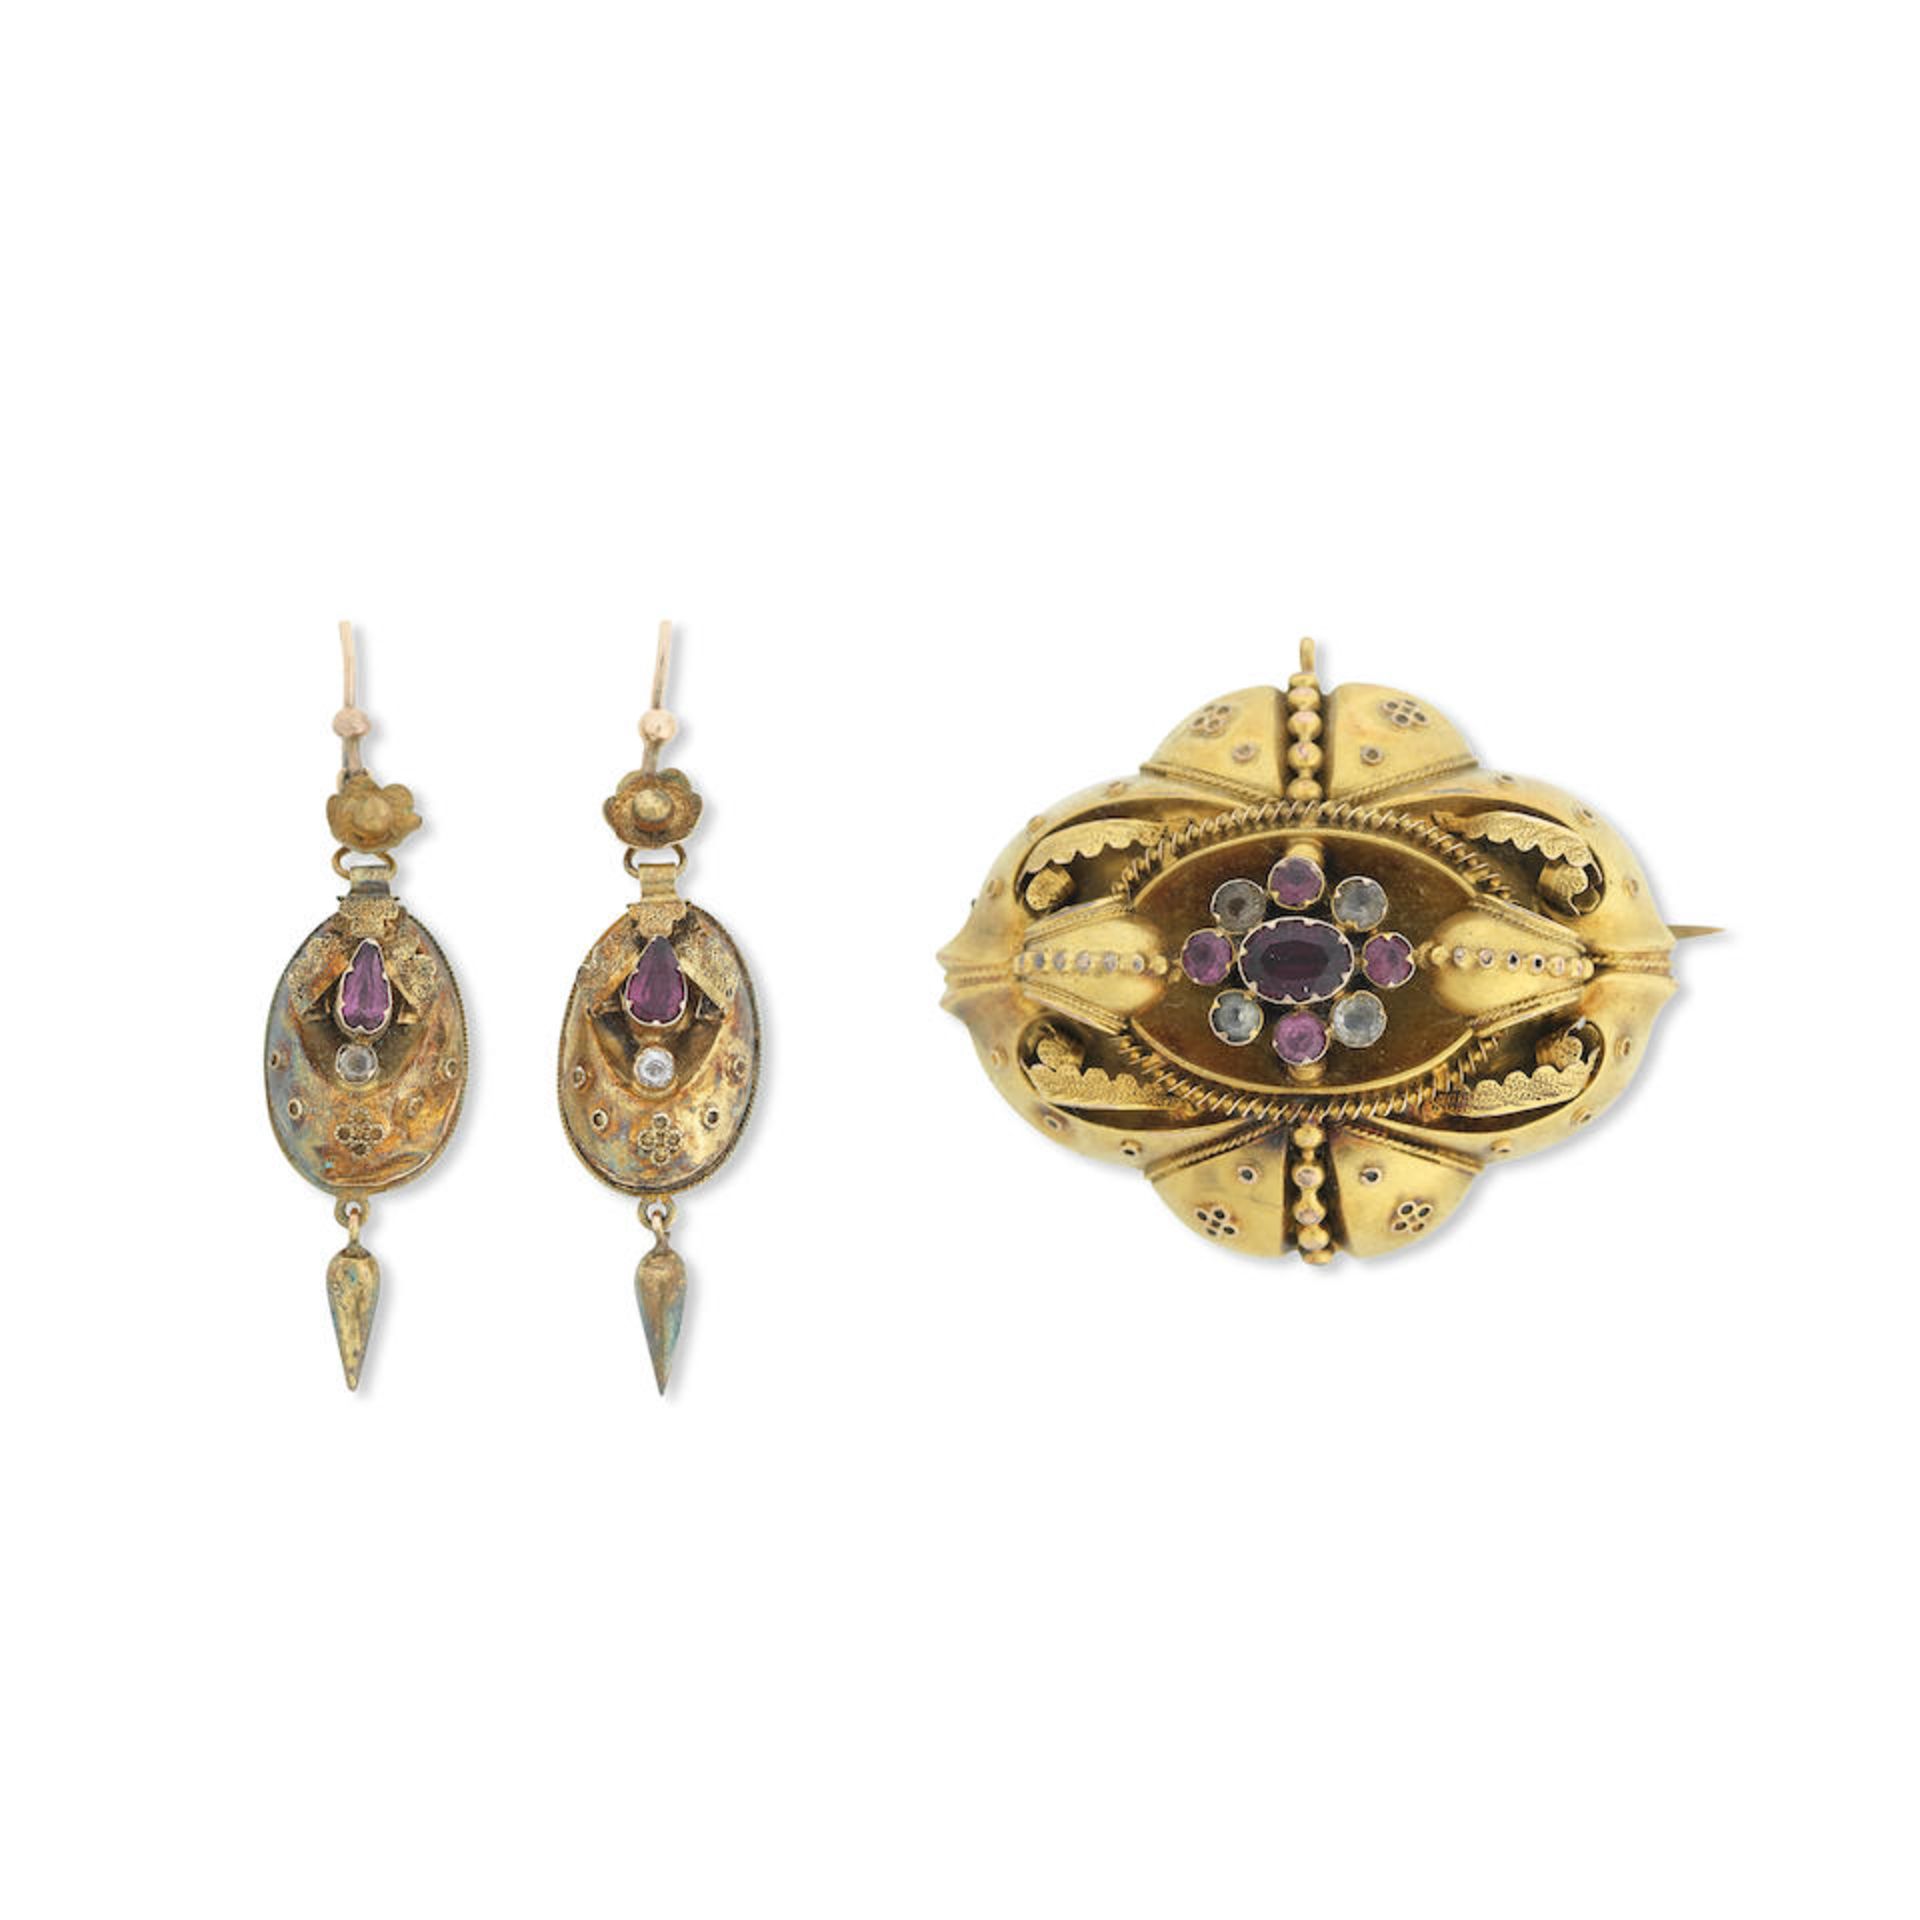 A gem-set brooch and a pair of gem-set pendent earrings, circa 1860